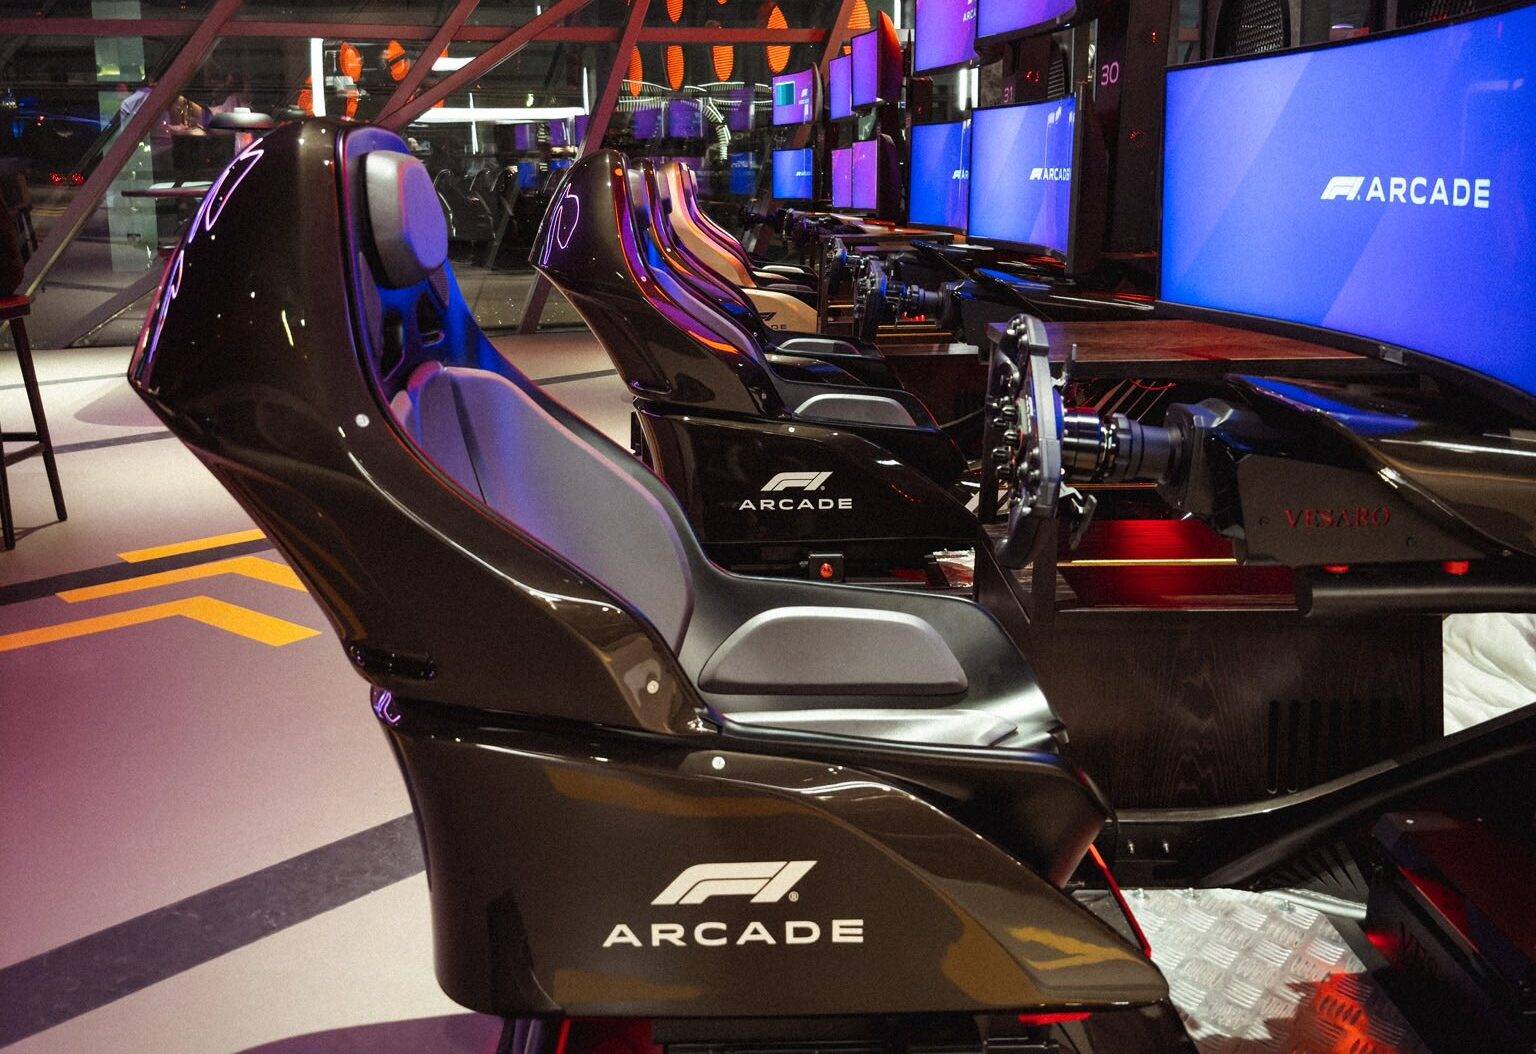 The F1 Arcade